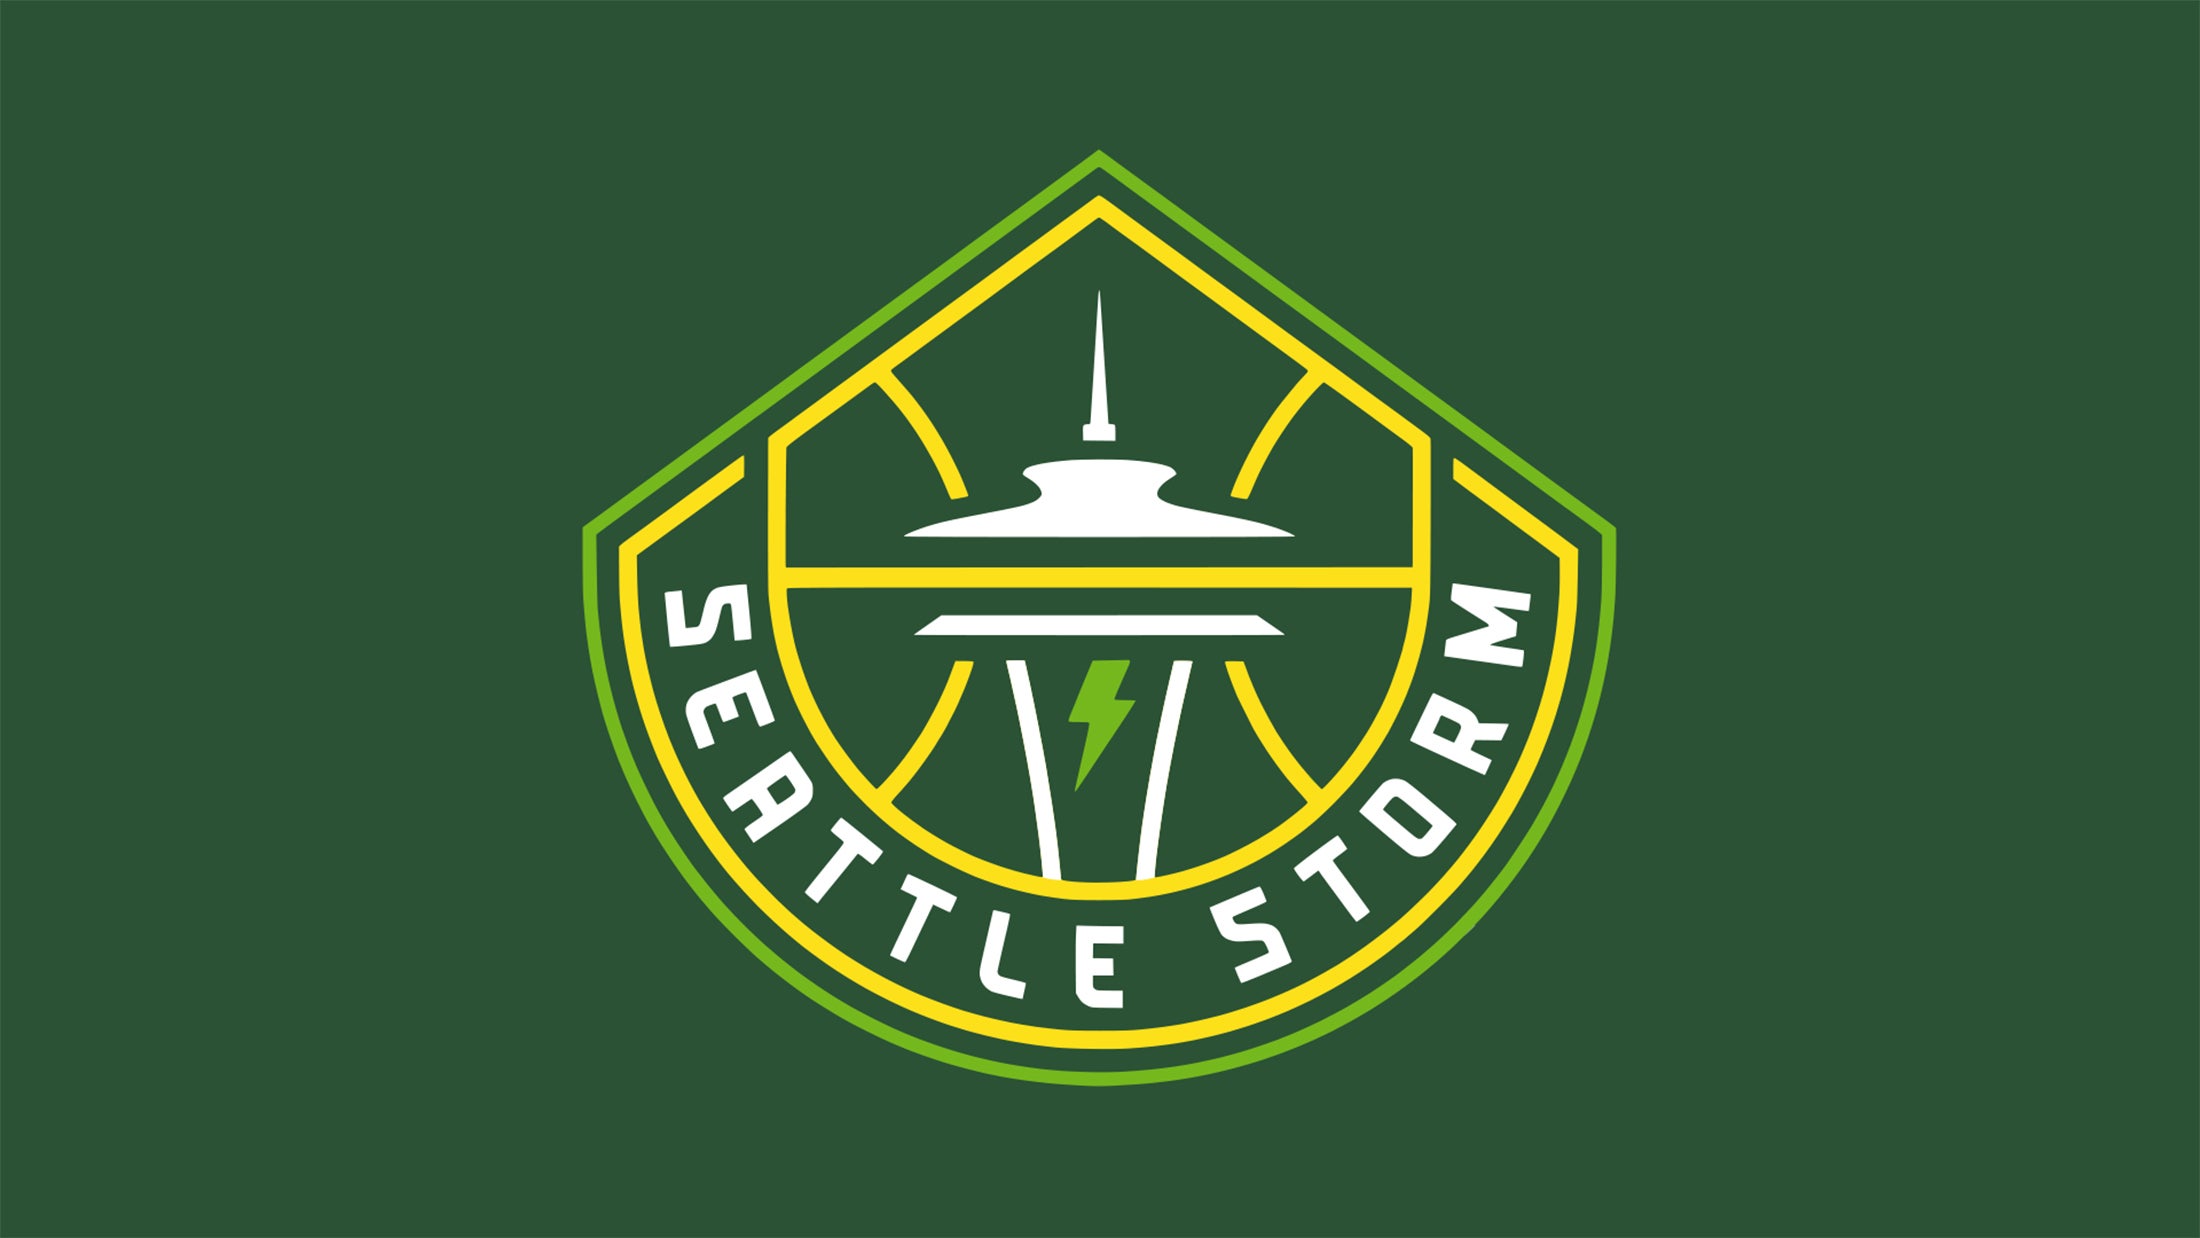 Seattle Storm vs. Washington Mystics in Seattle promo photo for Climate Pledge Arena presale offer code